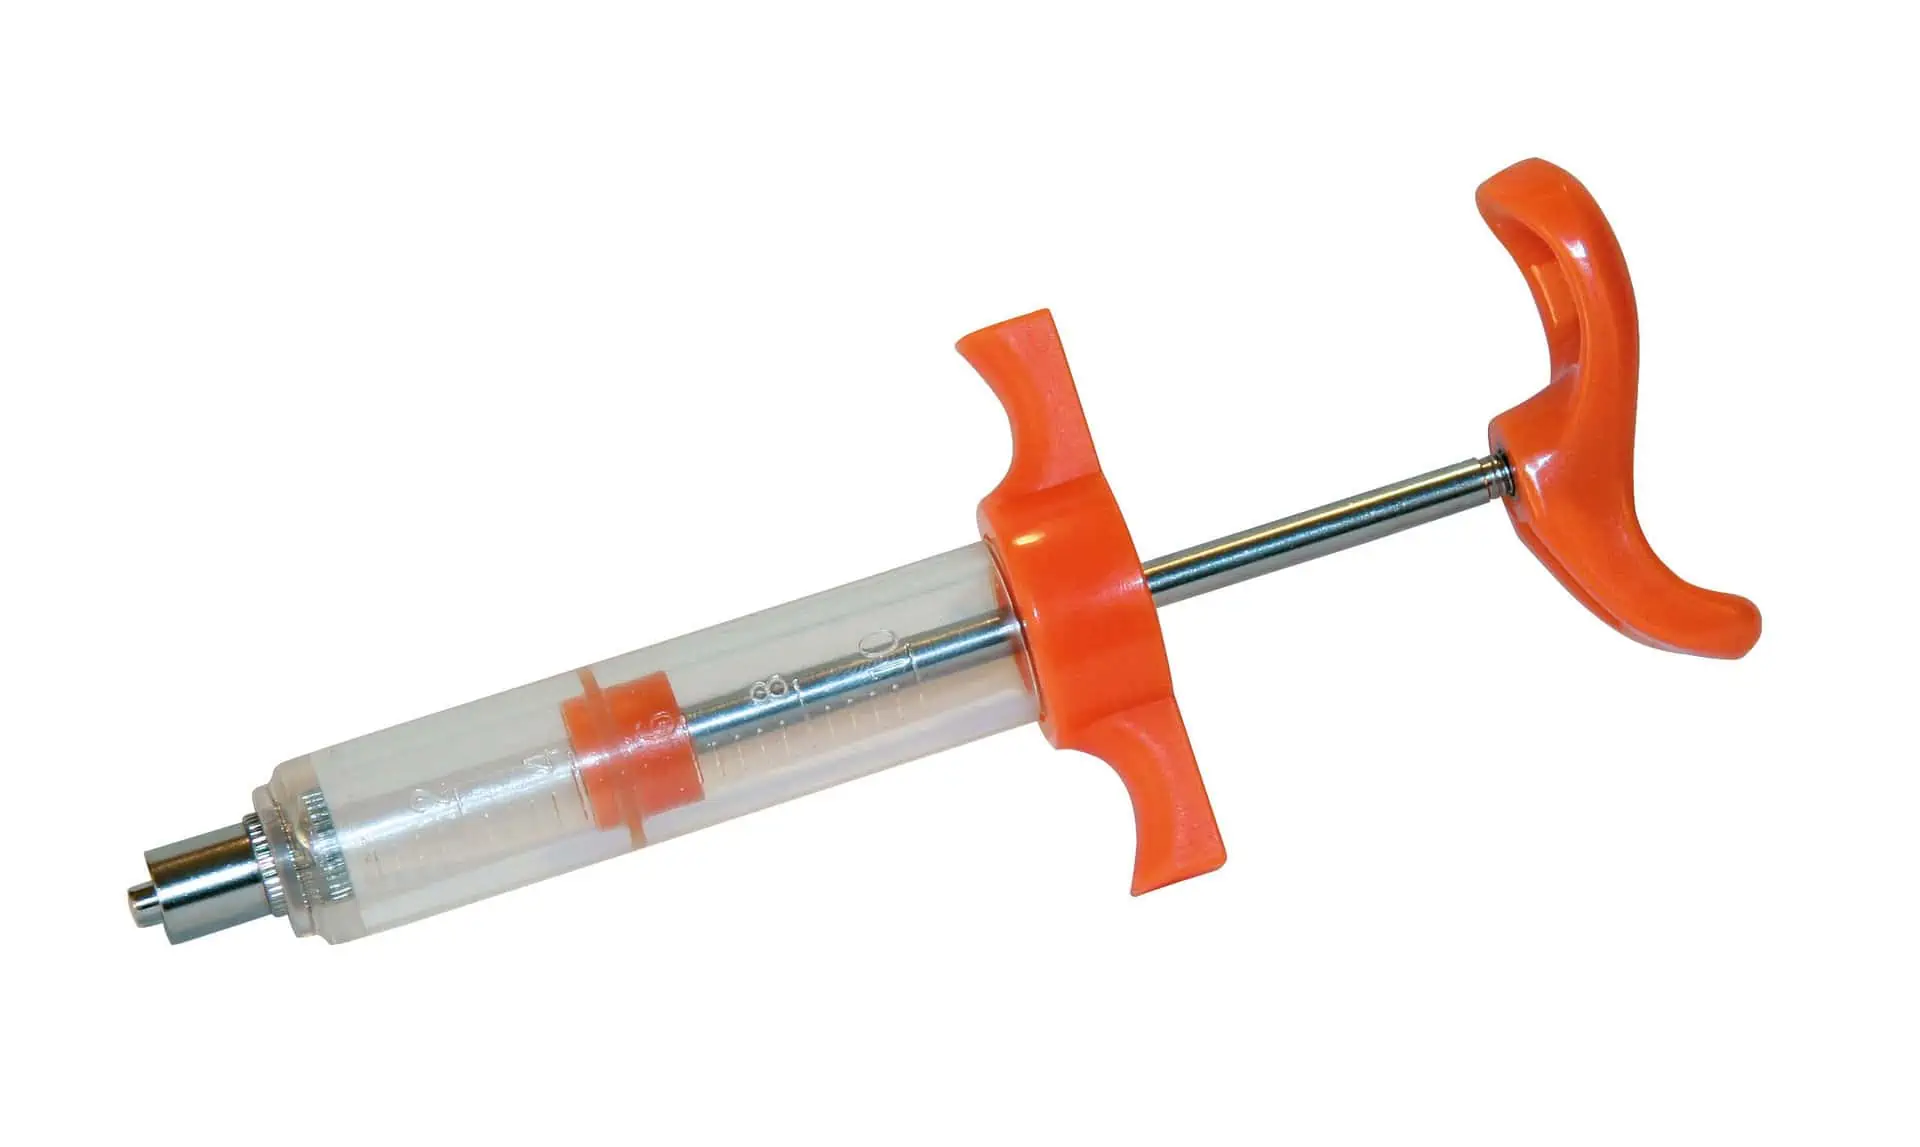 Nylon dosing syringe LuerLock, 10 ml, with plastic handle